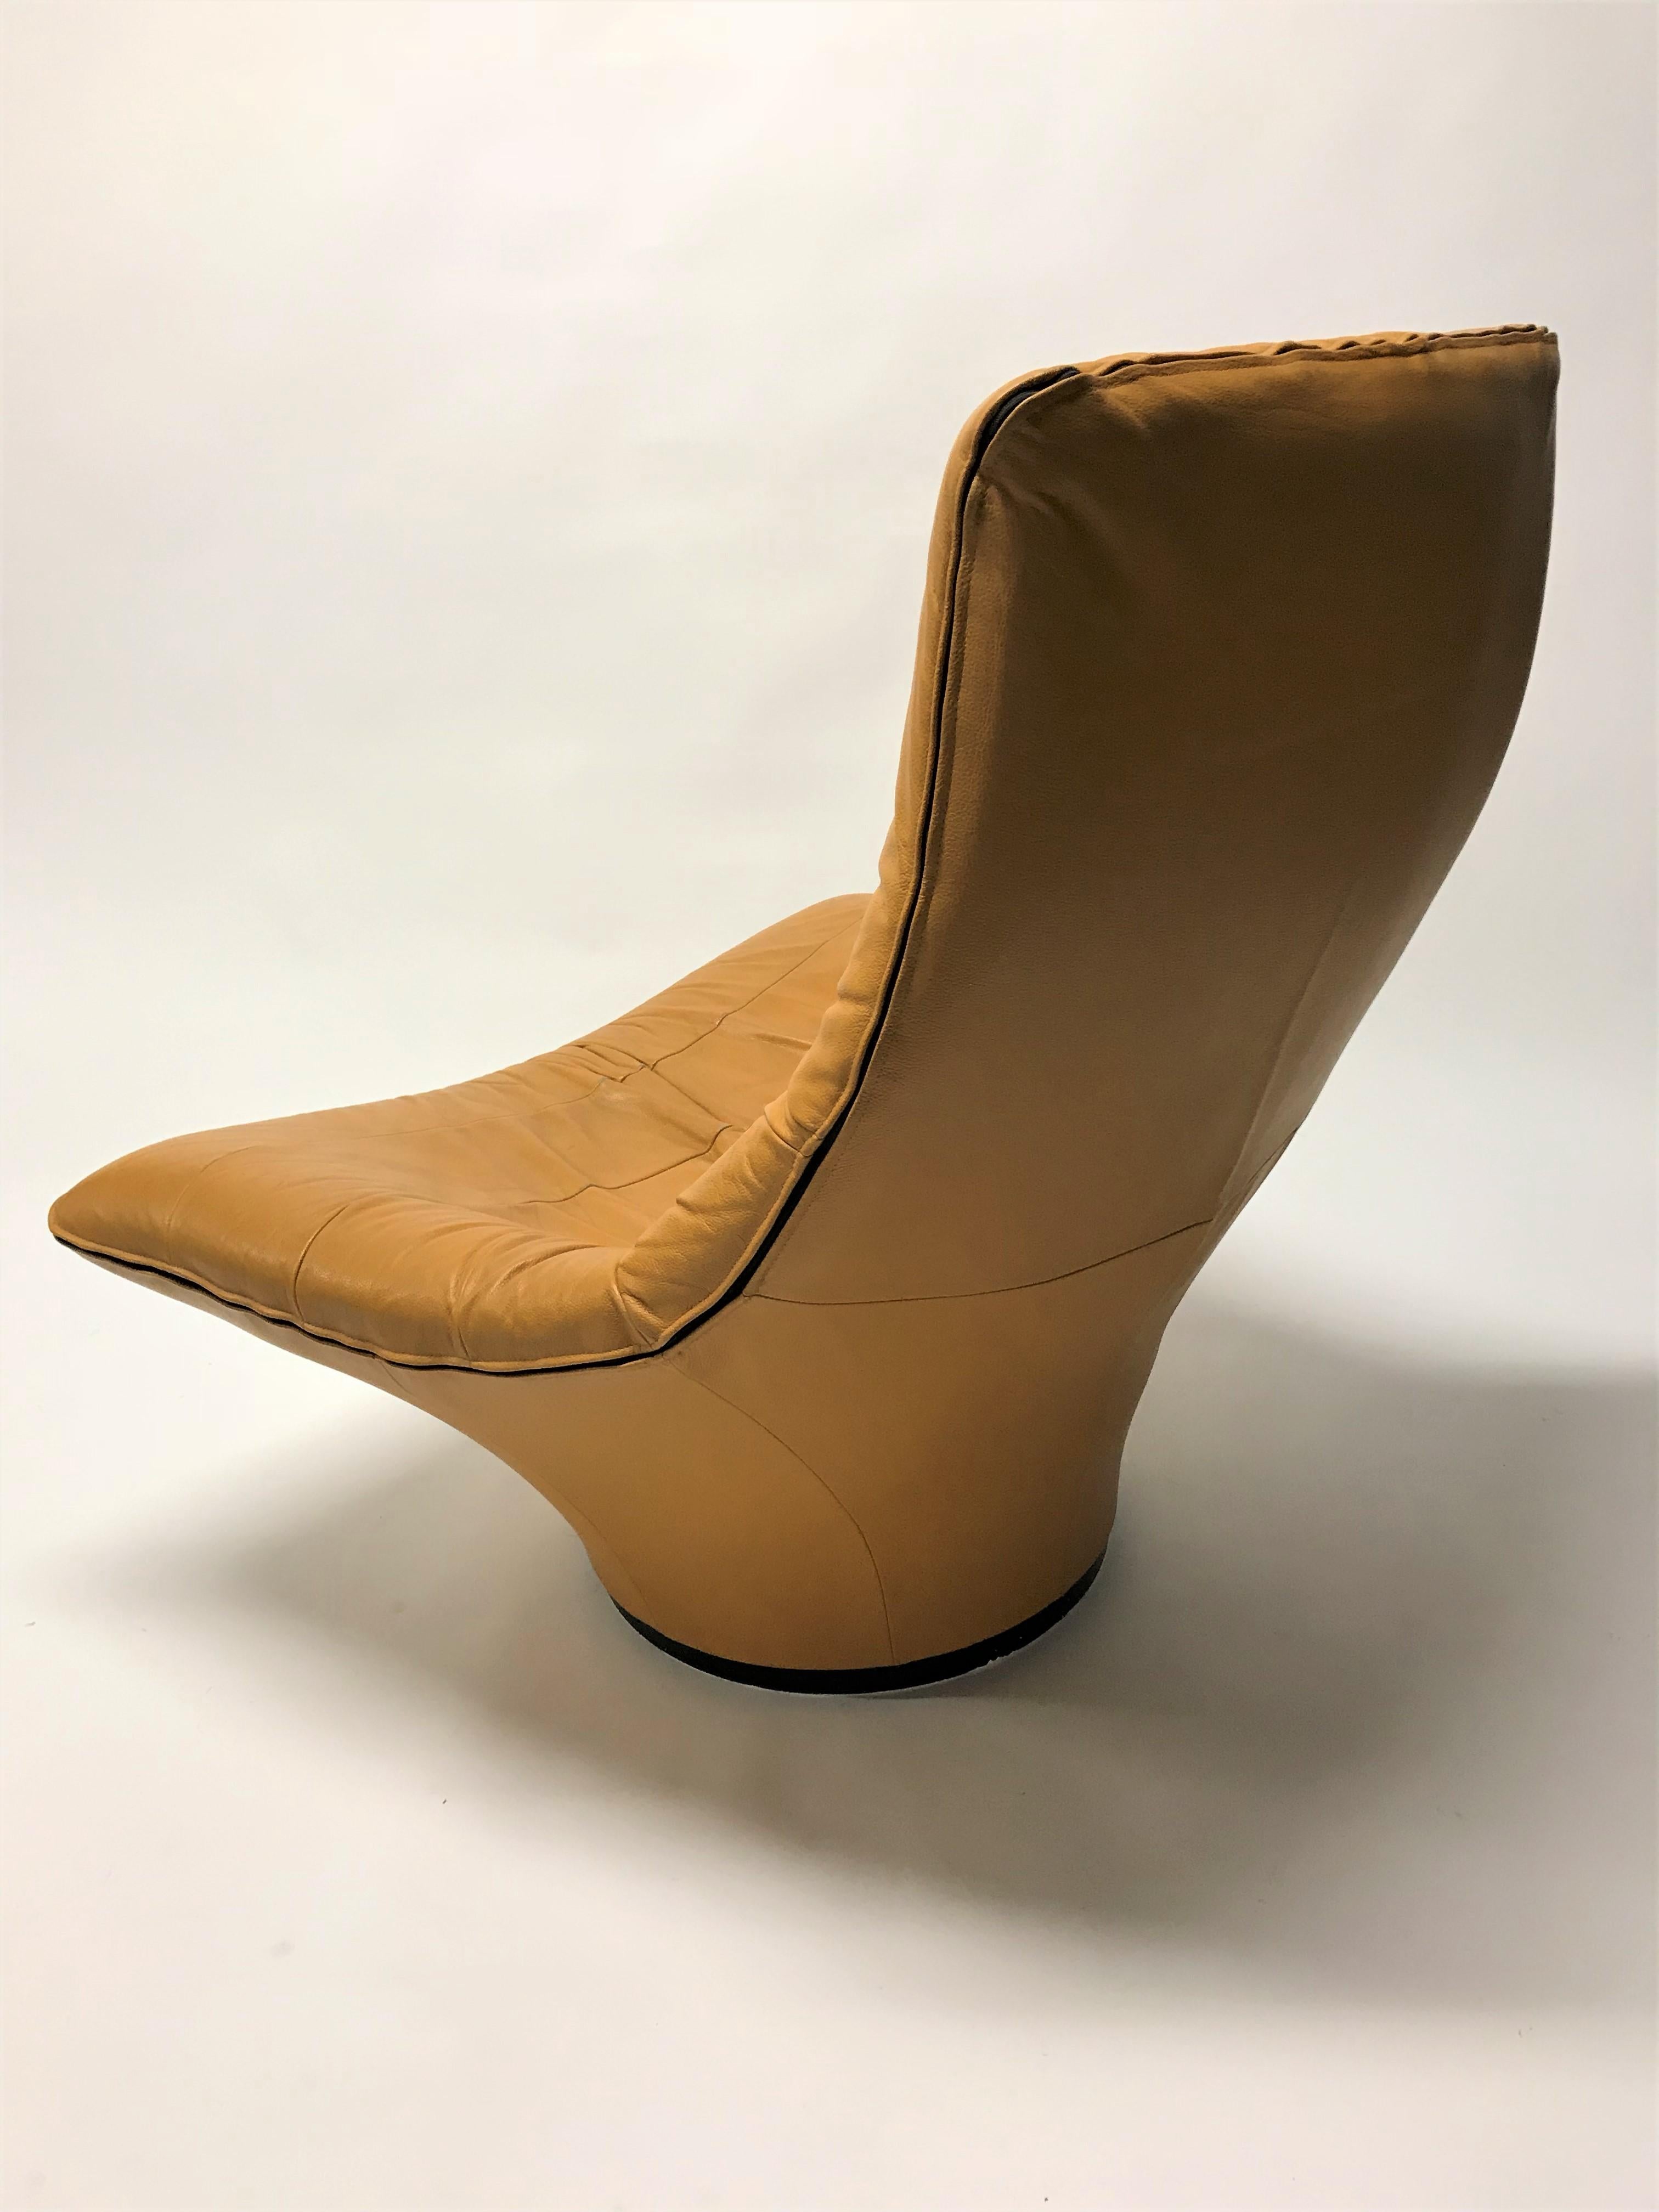 Mid-Century Modern Vintage Leather Lounge Chair by Gerard Van Den Berg, 1970s